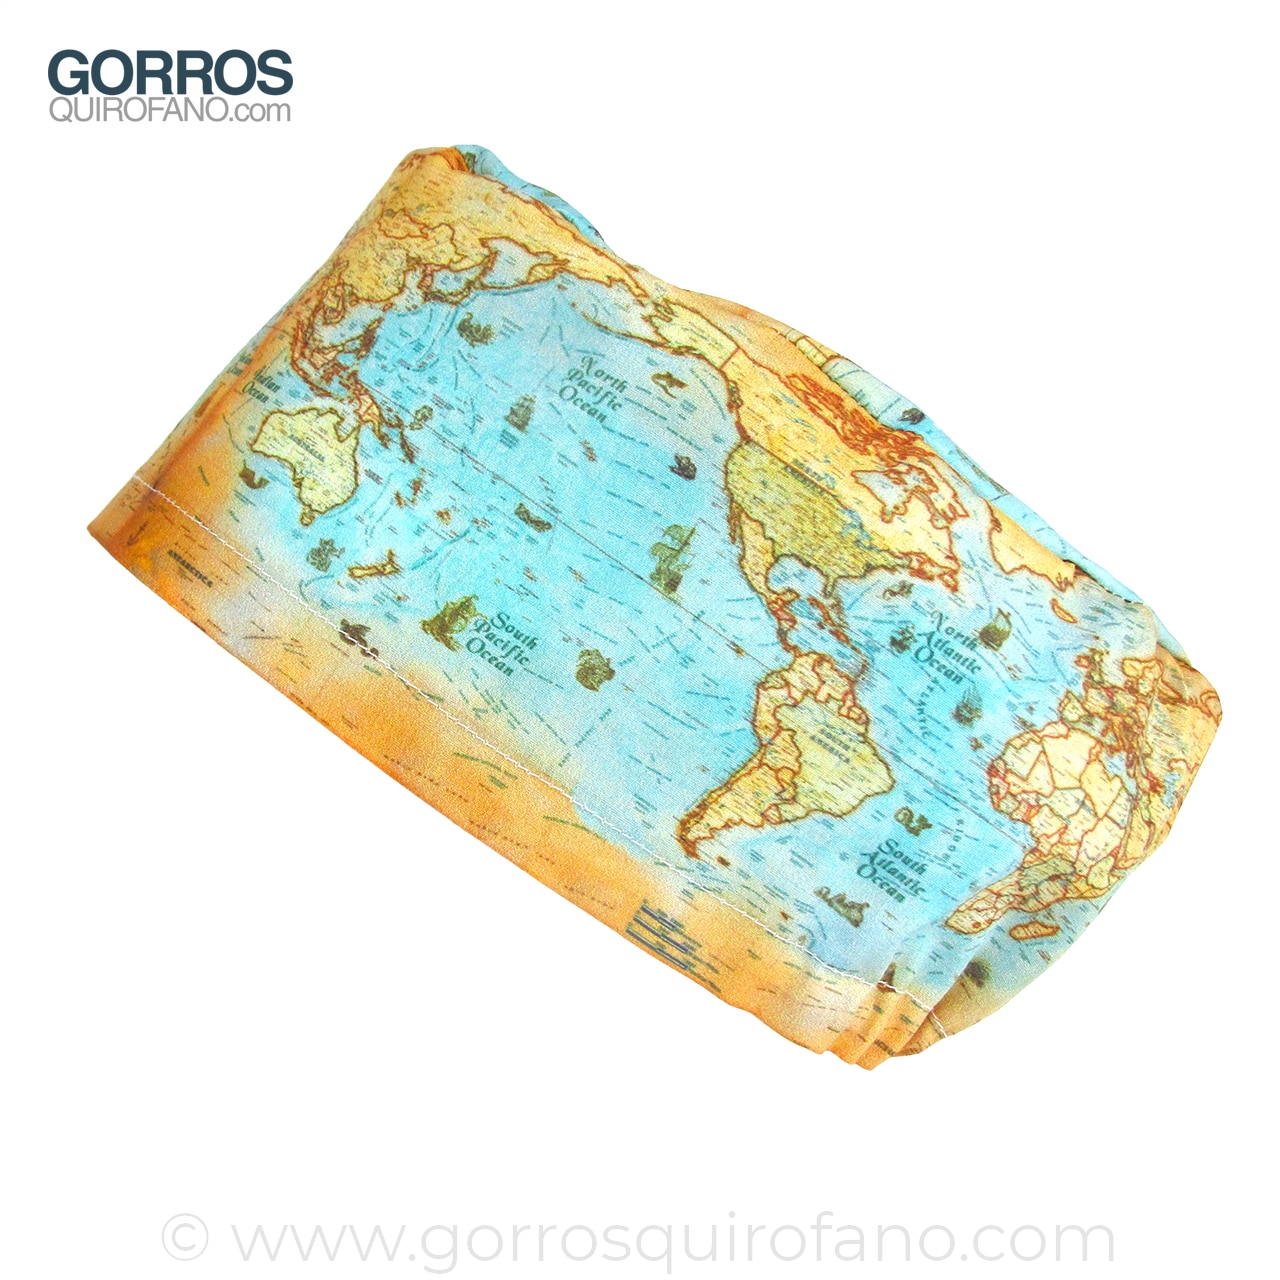 Gorros Quirofano I Love to Travel Mapa Mundi - 381